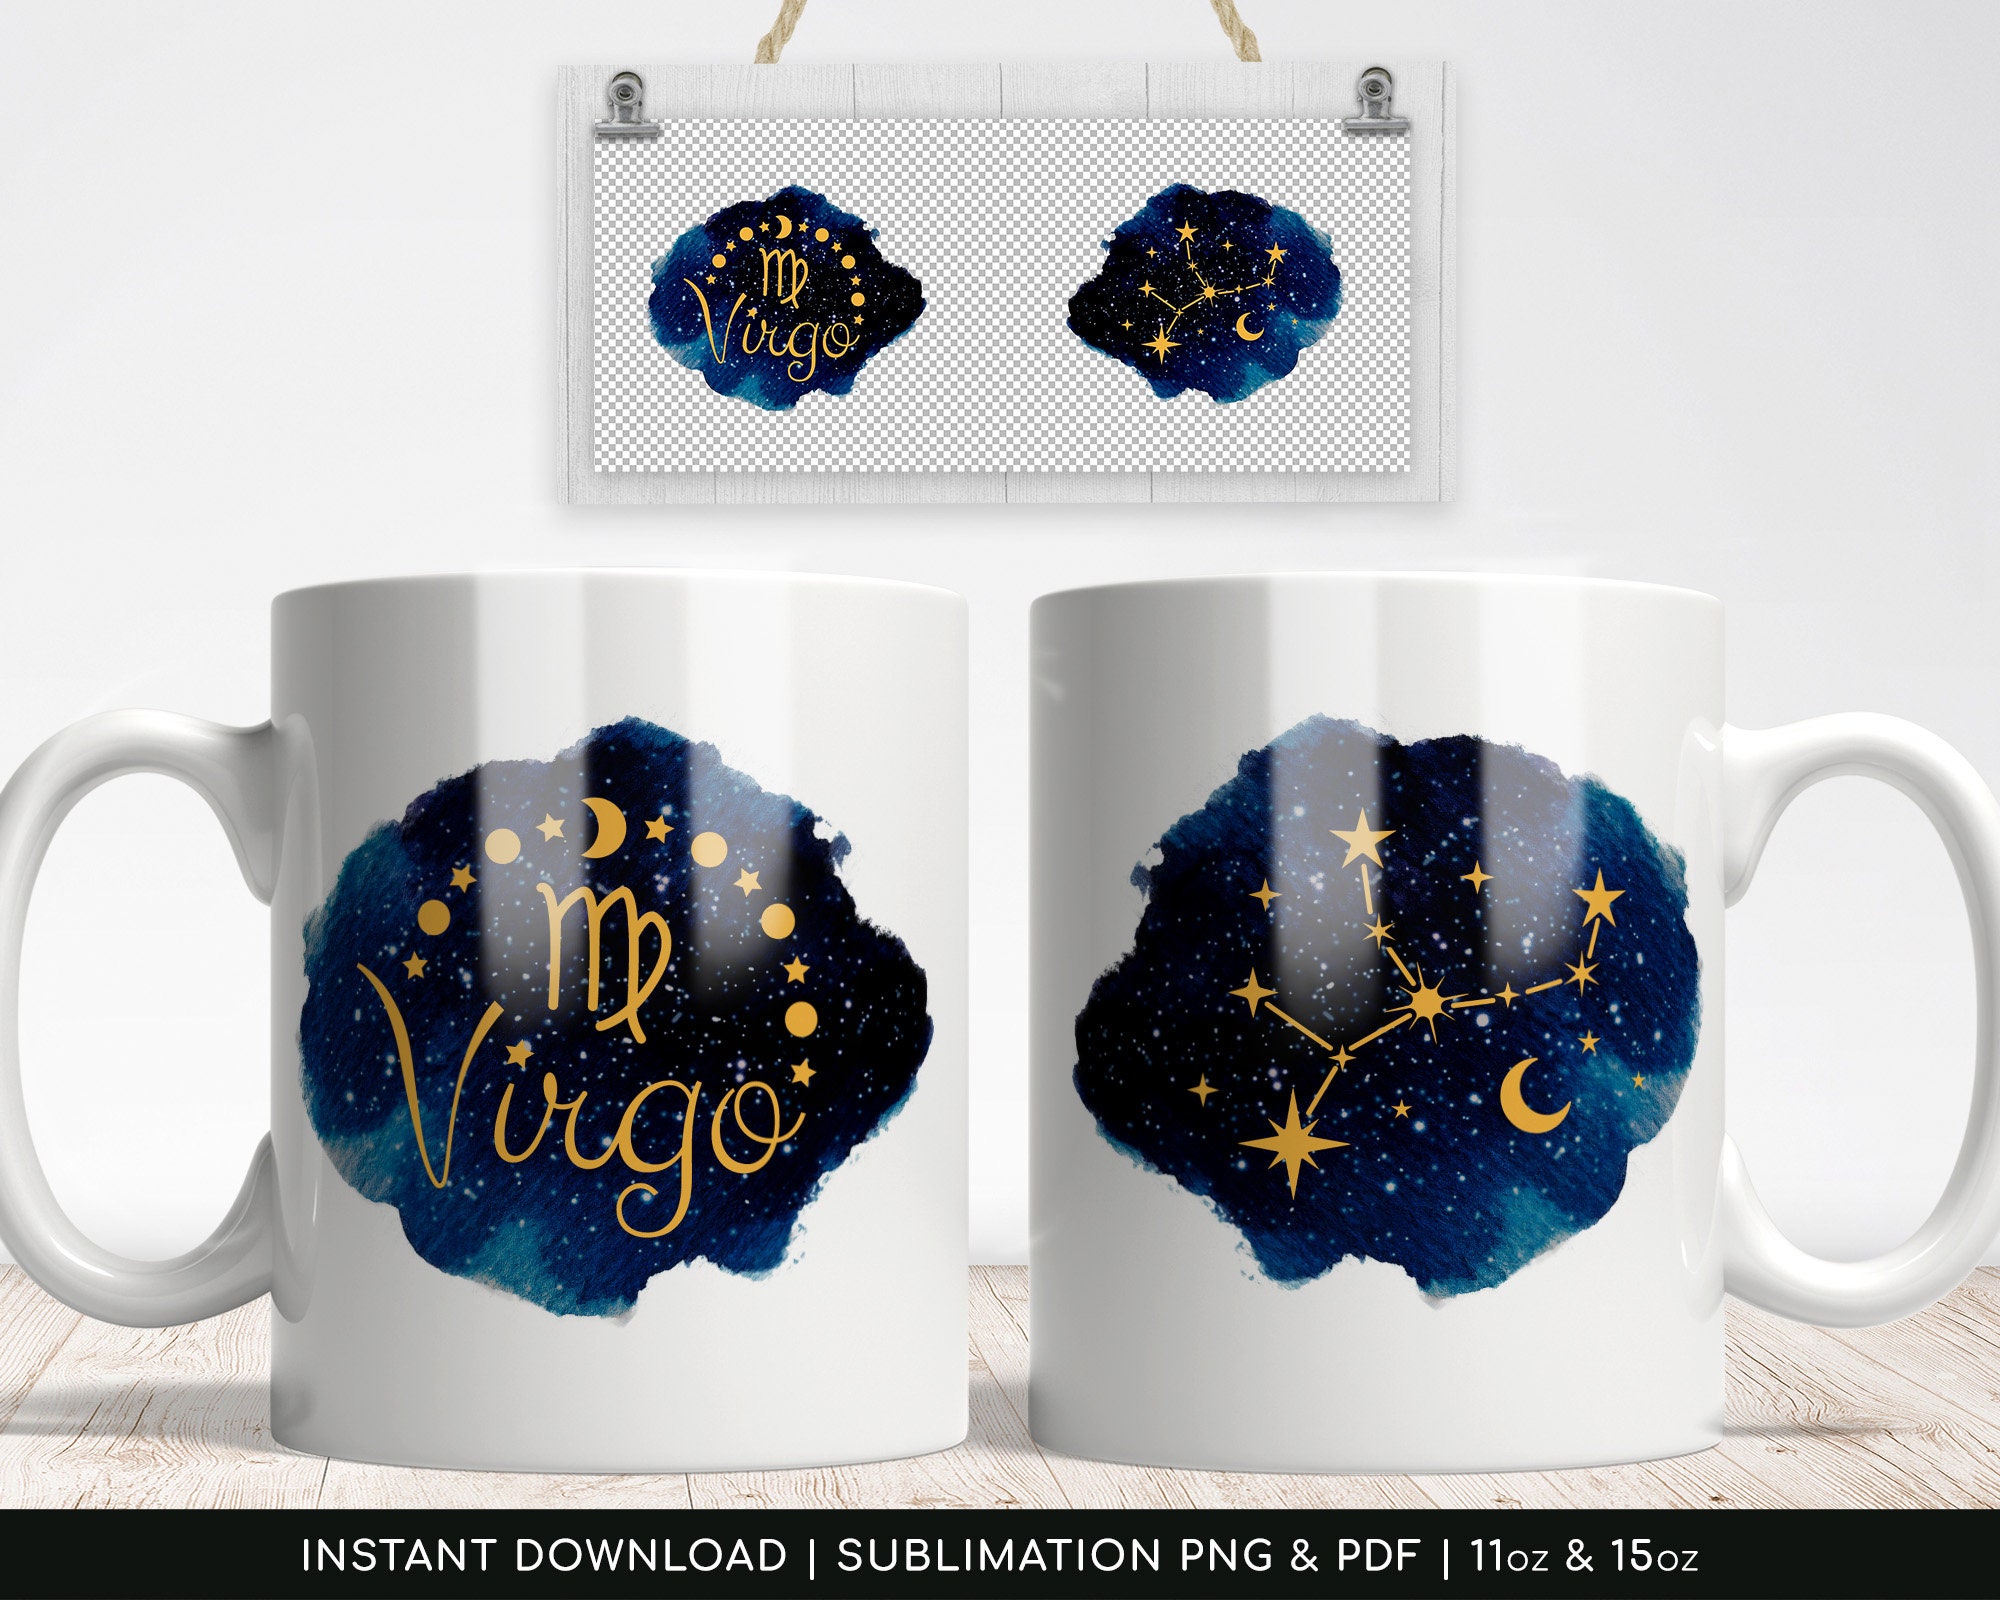 Sublimation Mug PNG, Virgo Zodiac Constellation, Sublimation Paper Centralized PDF - 11oz | 15oz - High-Resolution Transparent PNG